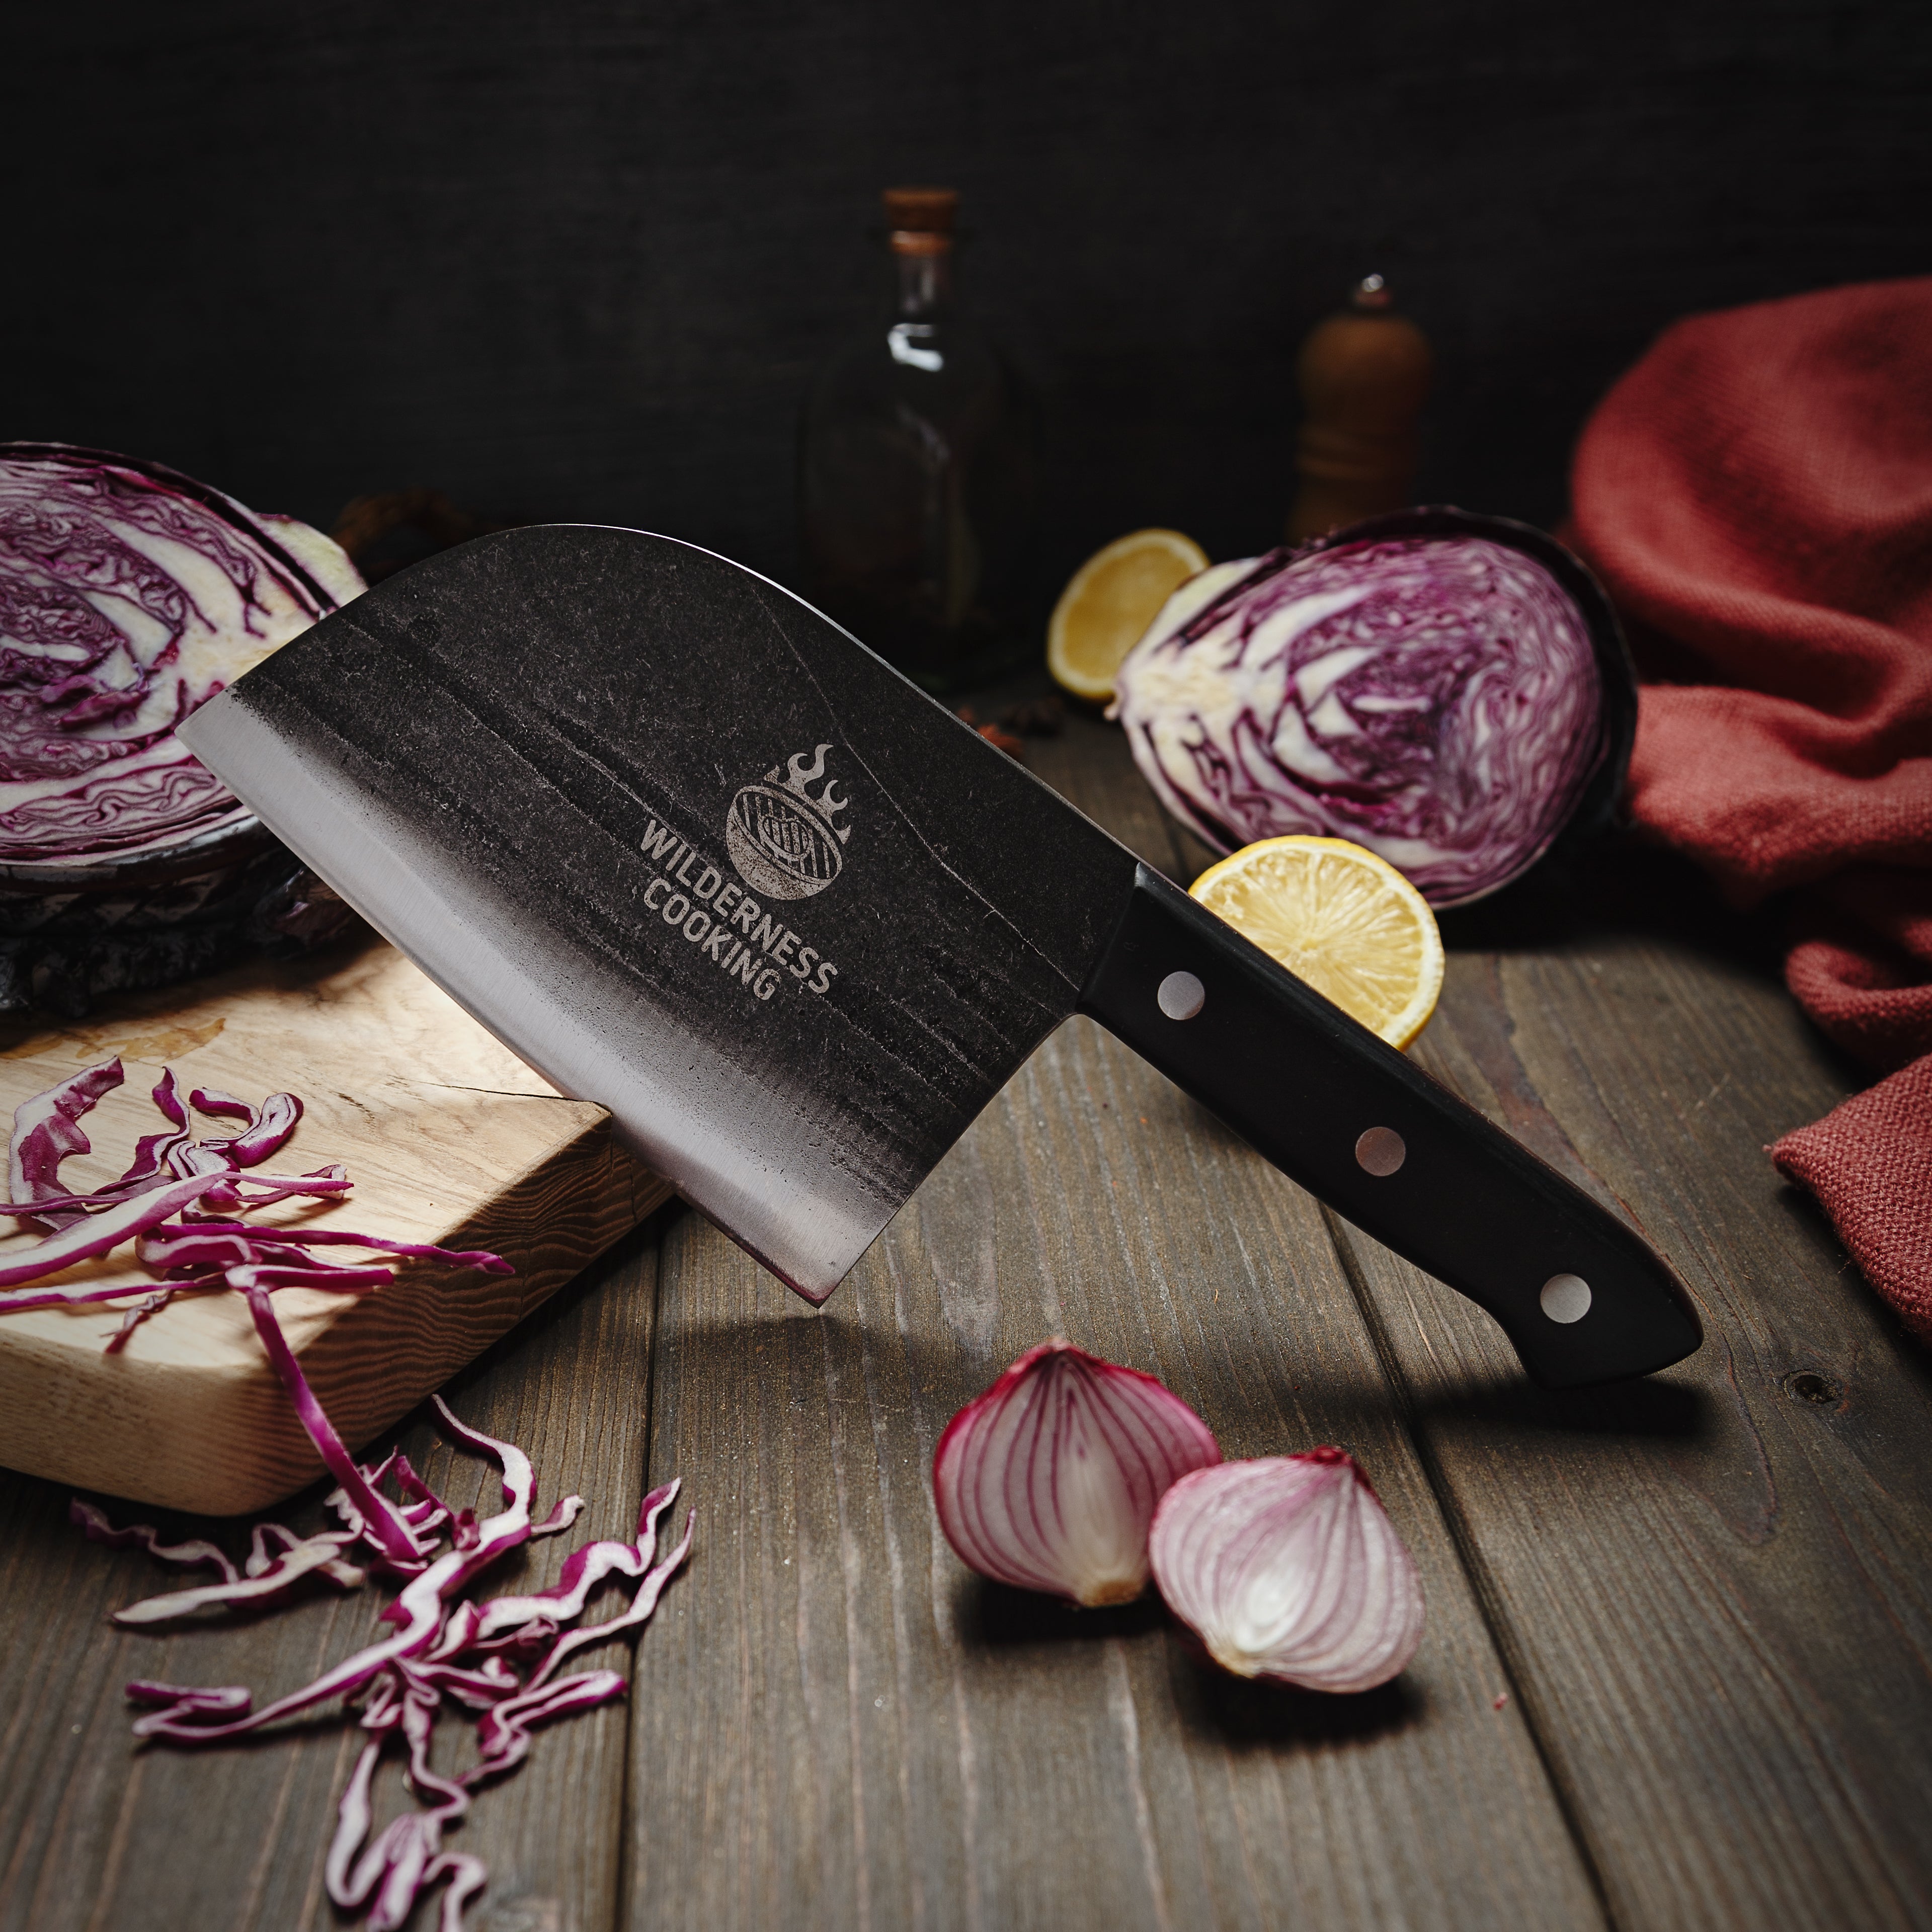 Cleaver-Messer im alten Stil mit Gürtels chleife Öko-Ledersc heide